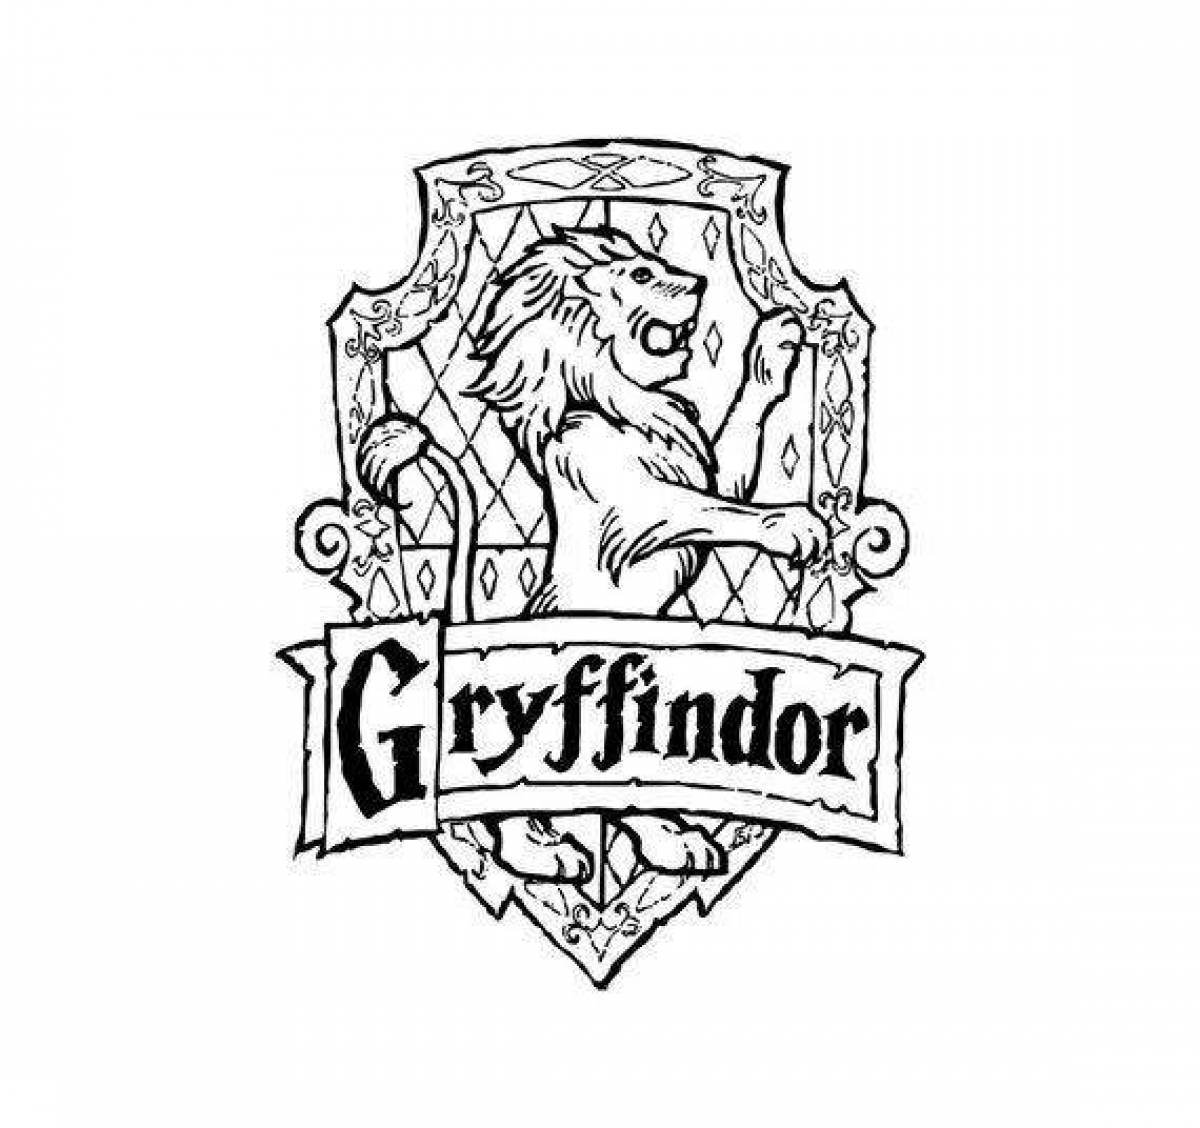 Rampant Gryffindor coloring page